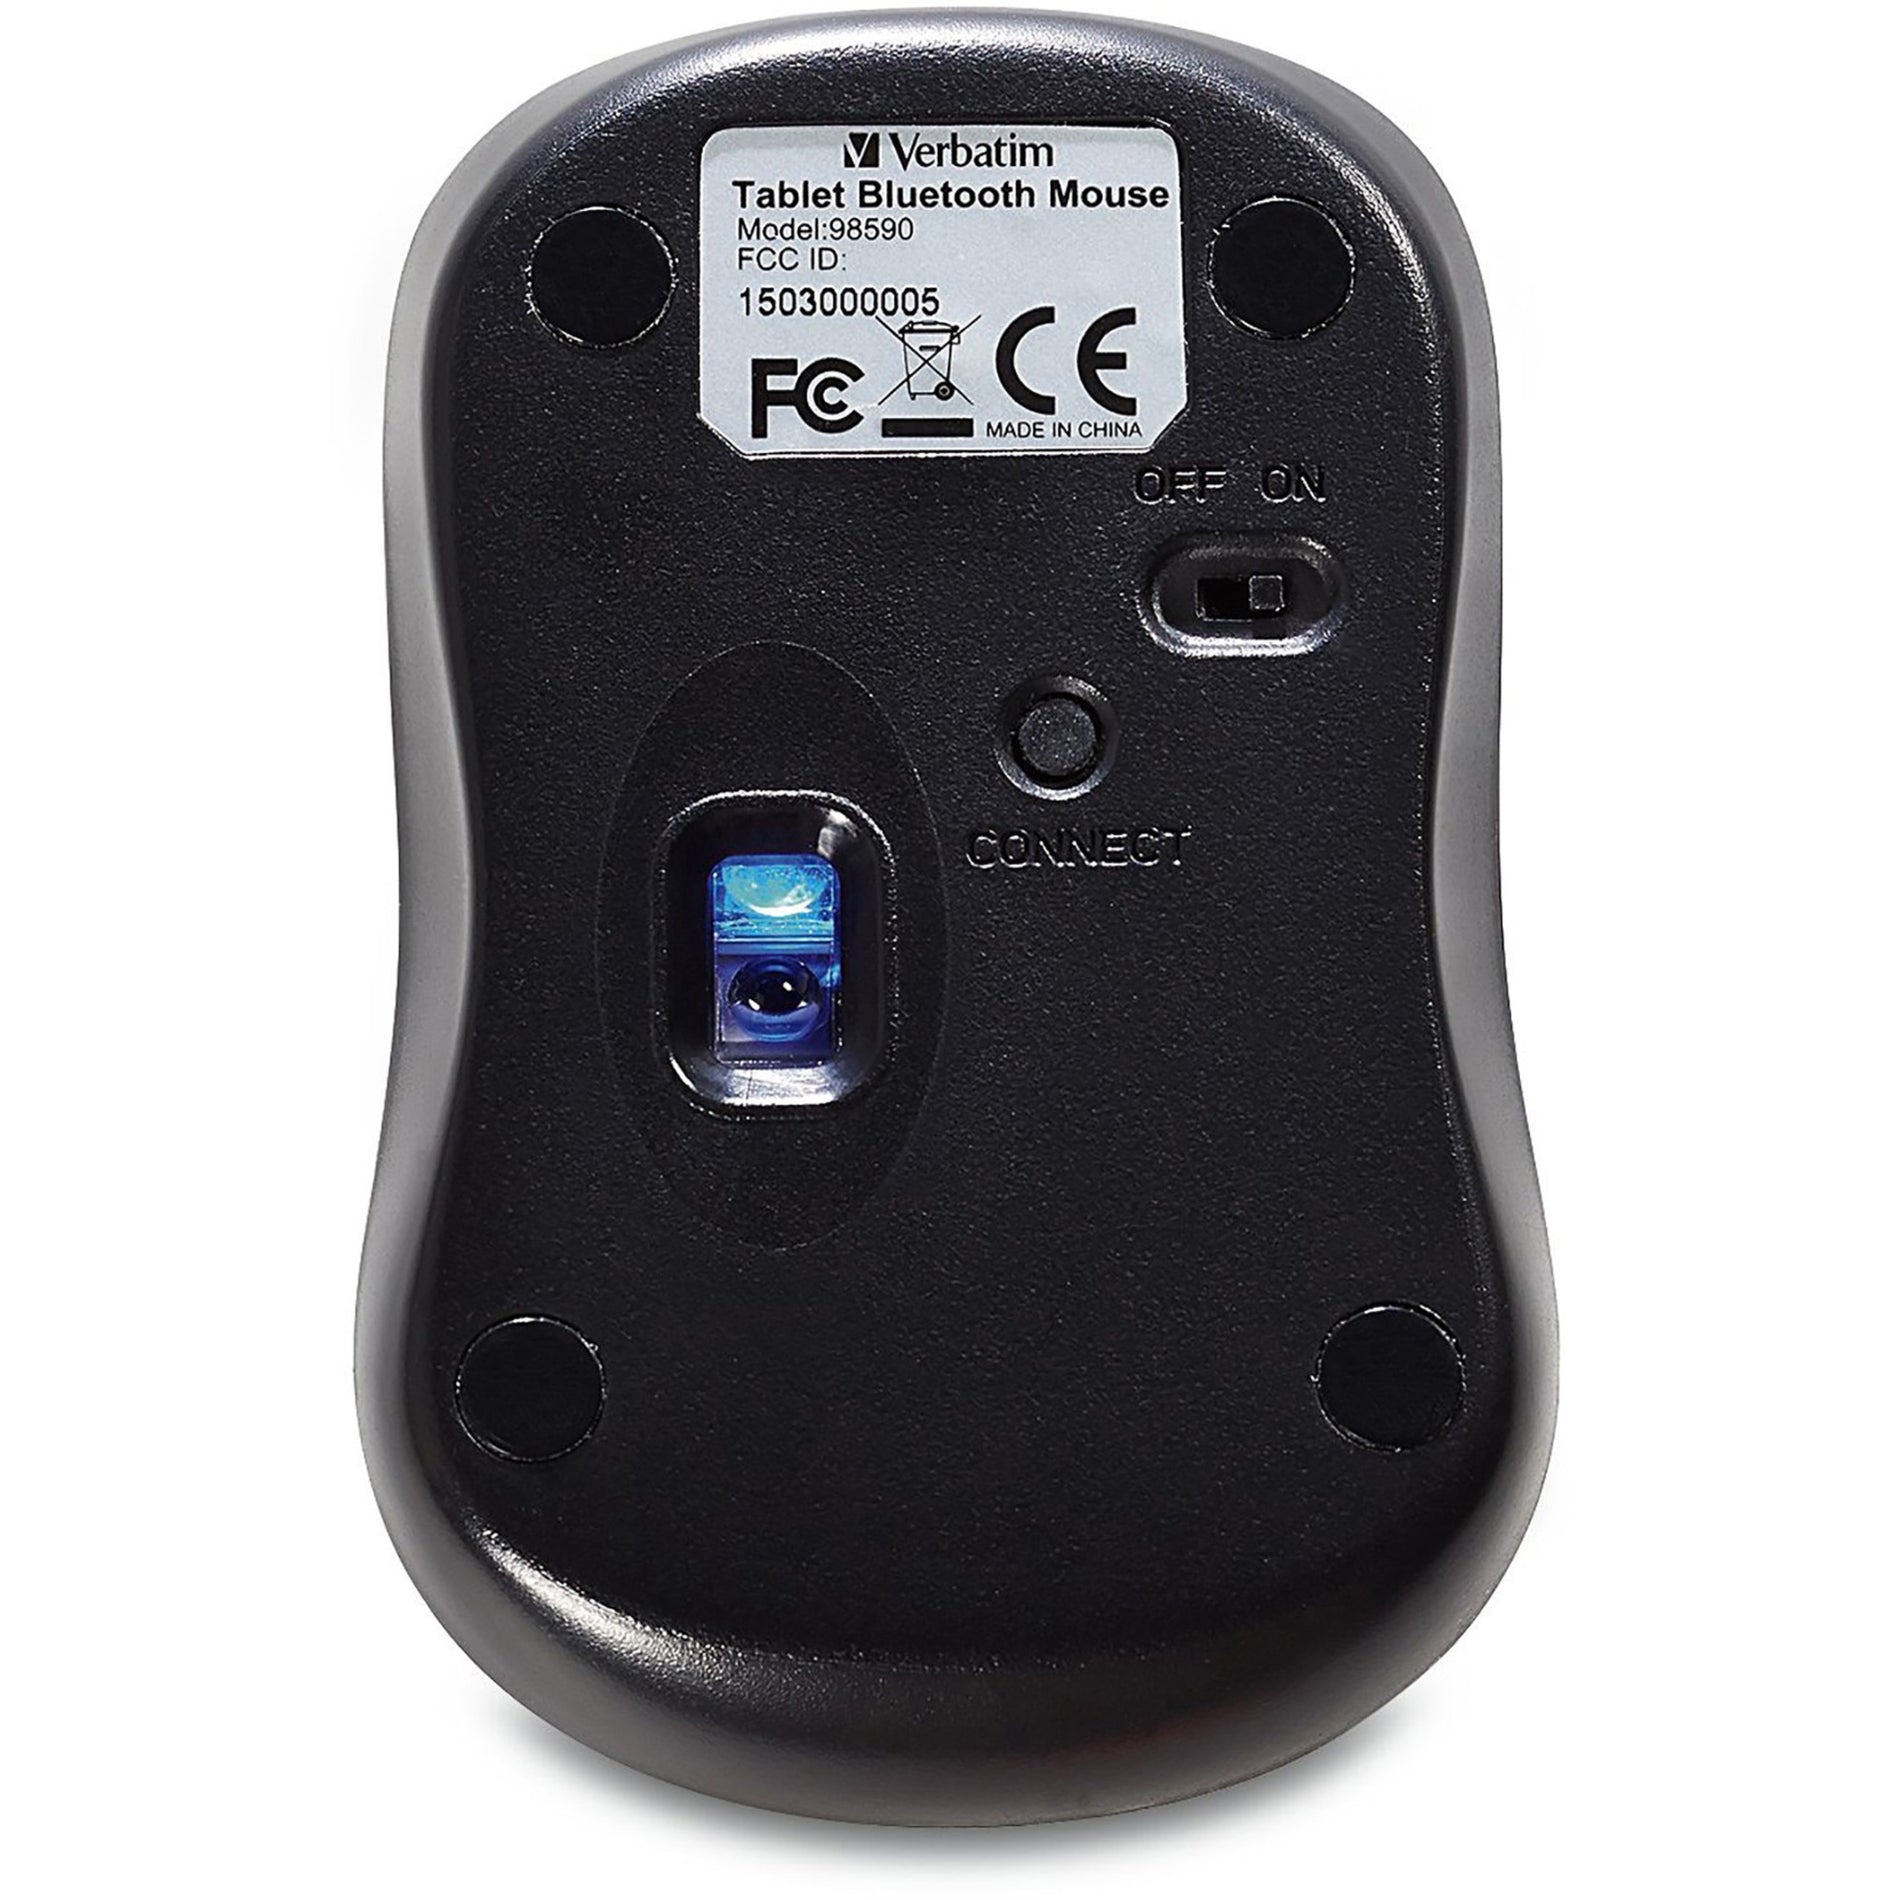 Verbatim 98590 Bluetooth Wireless Tablet Multi-Trac Blue LED Mouse - Graphite, Ergonomic Fit, 1600 dpi